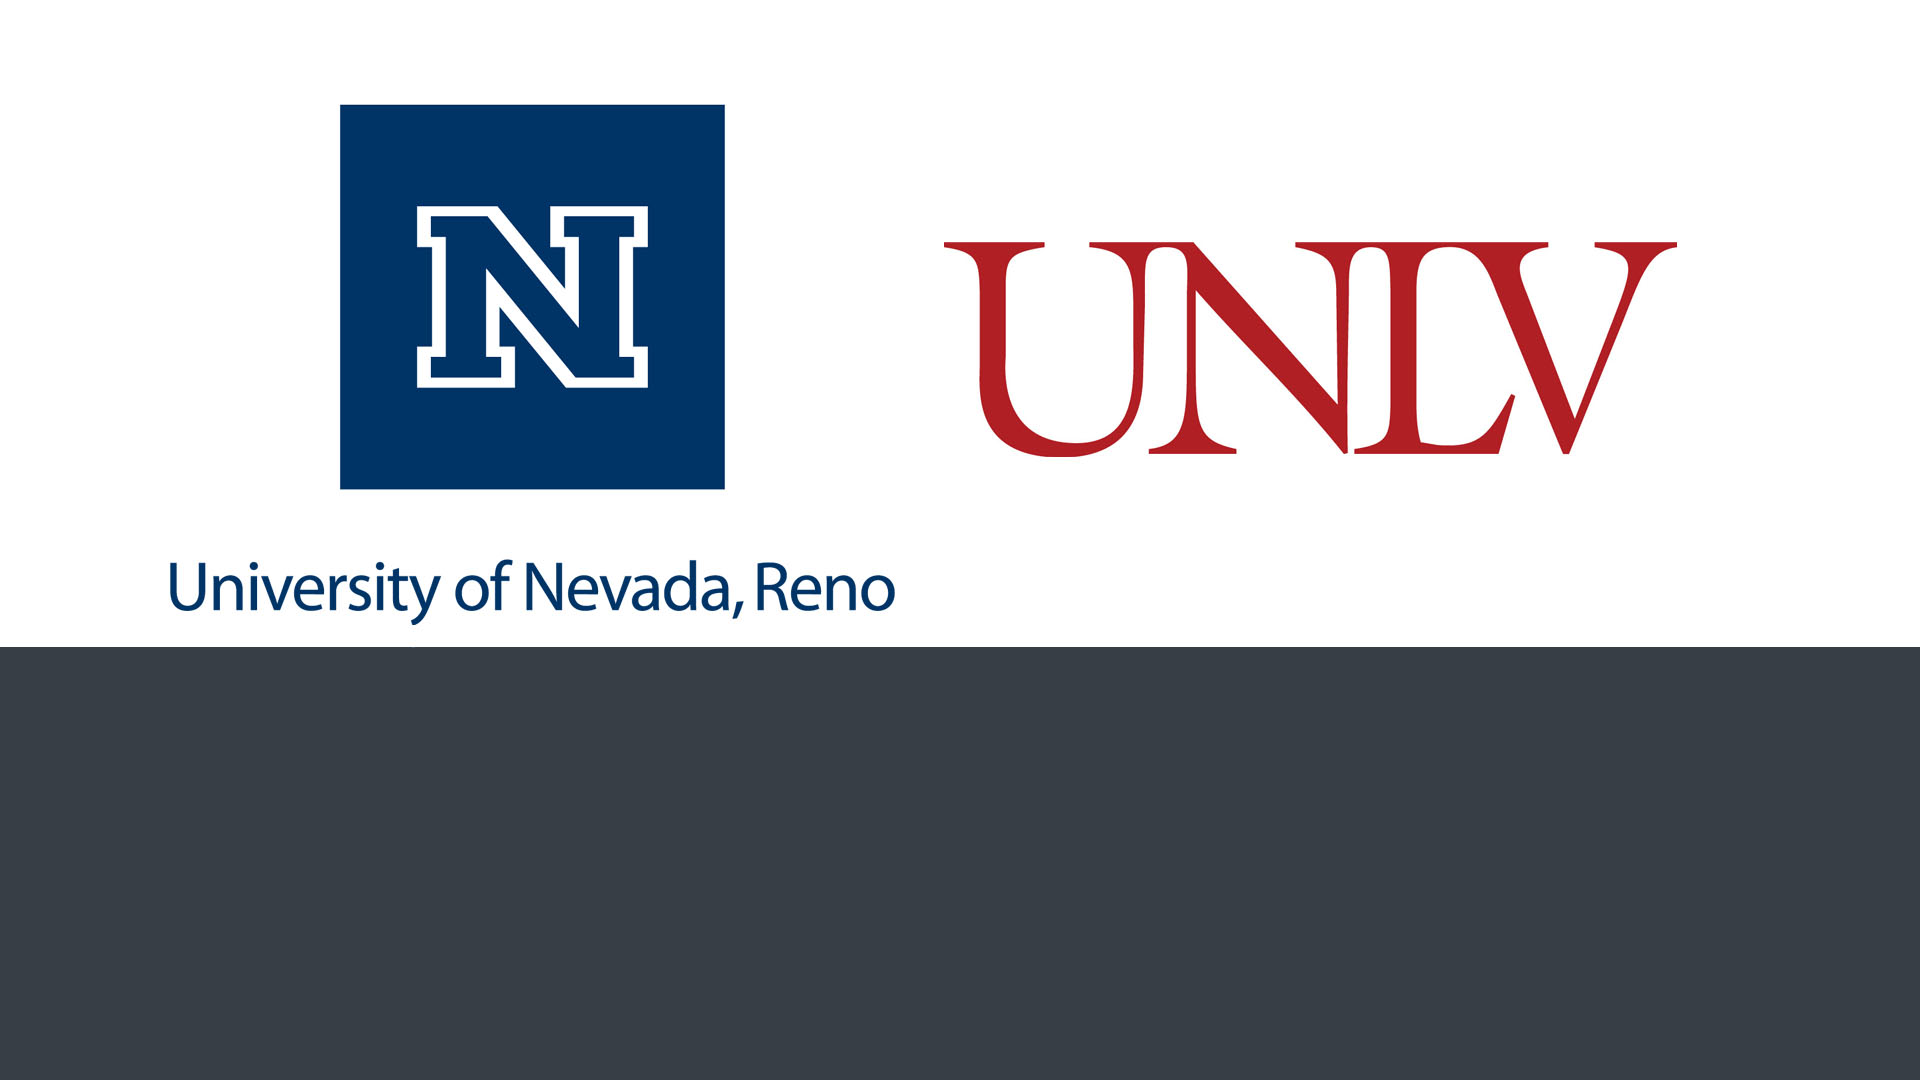 University of Nevada, Reno and University of Nevada, Las Vegas logos